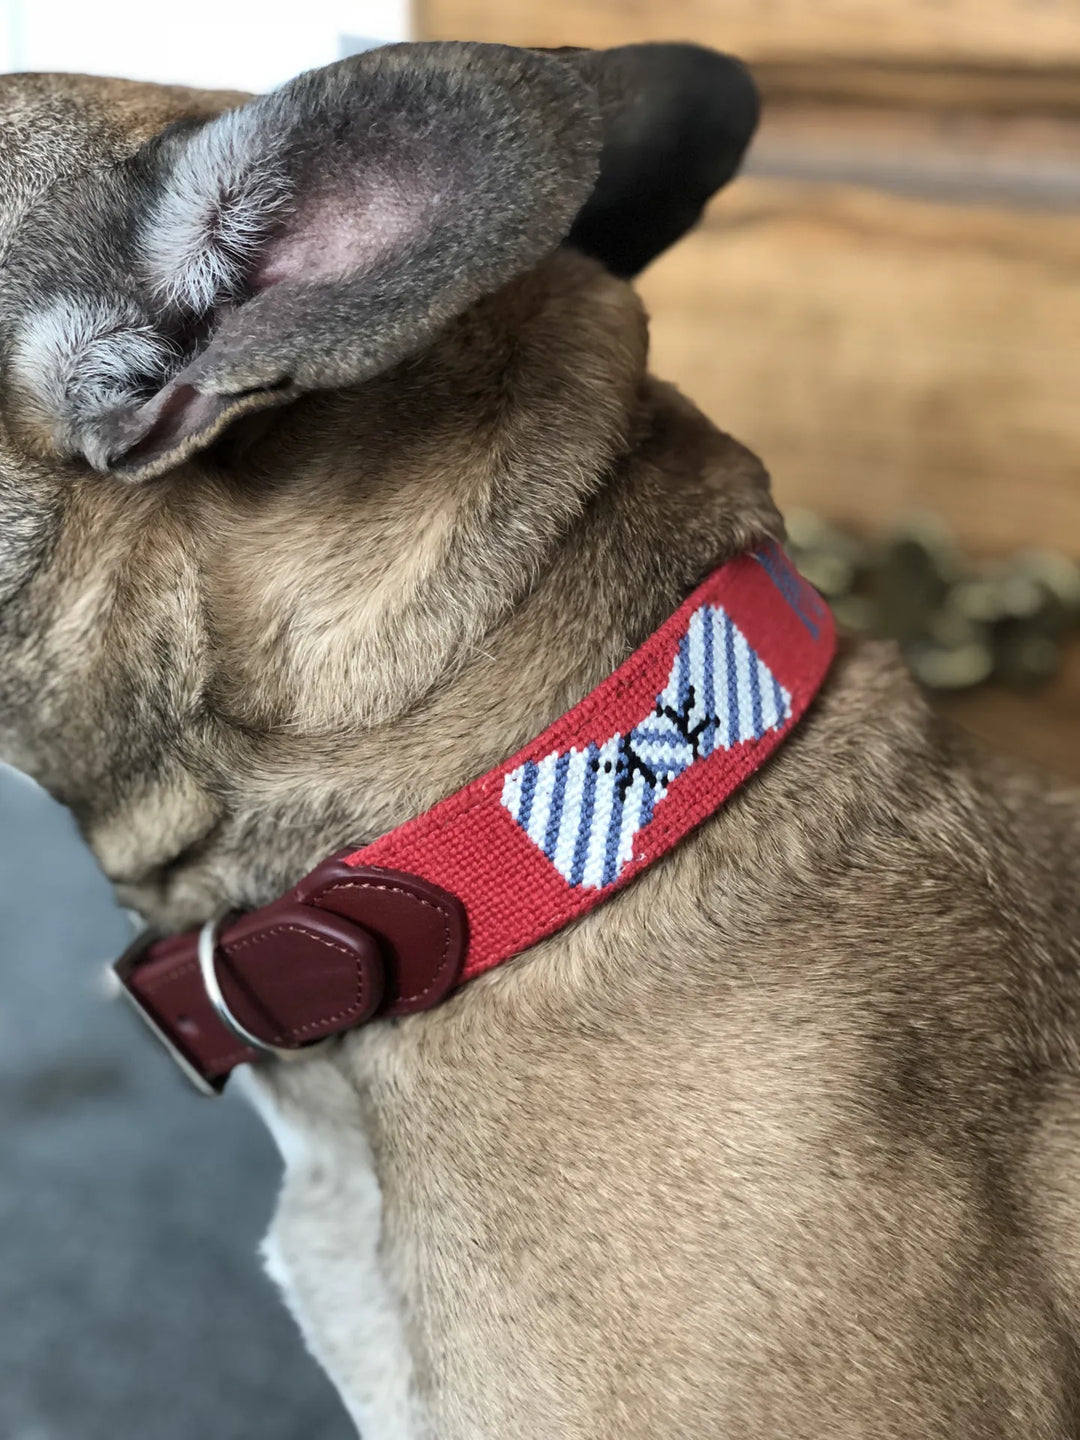 Dog Collars